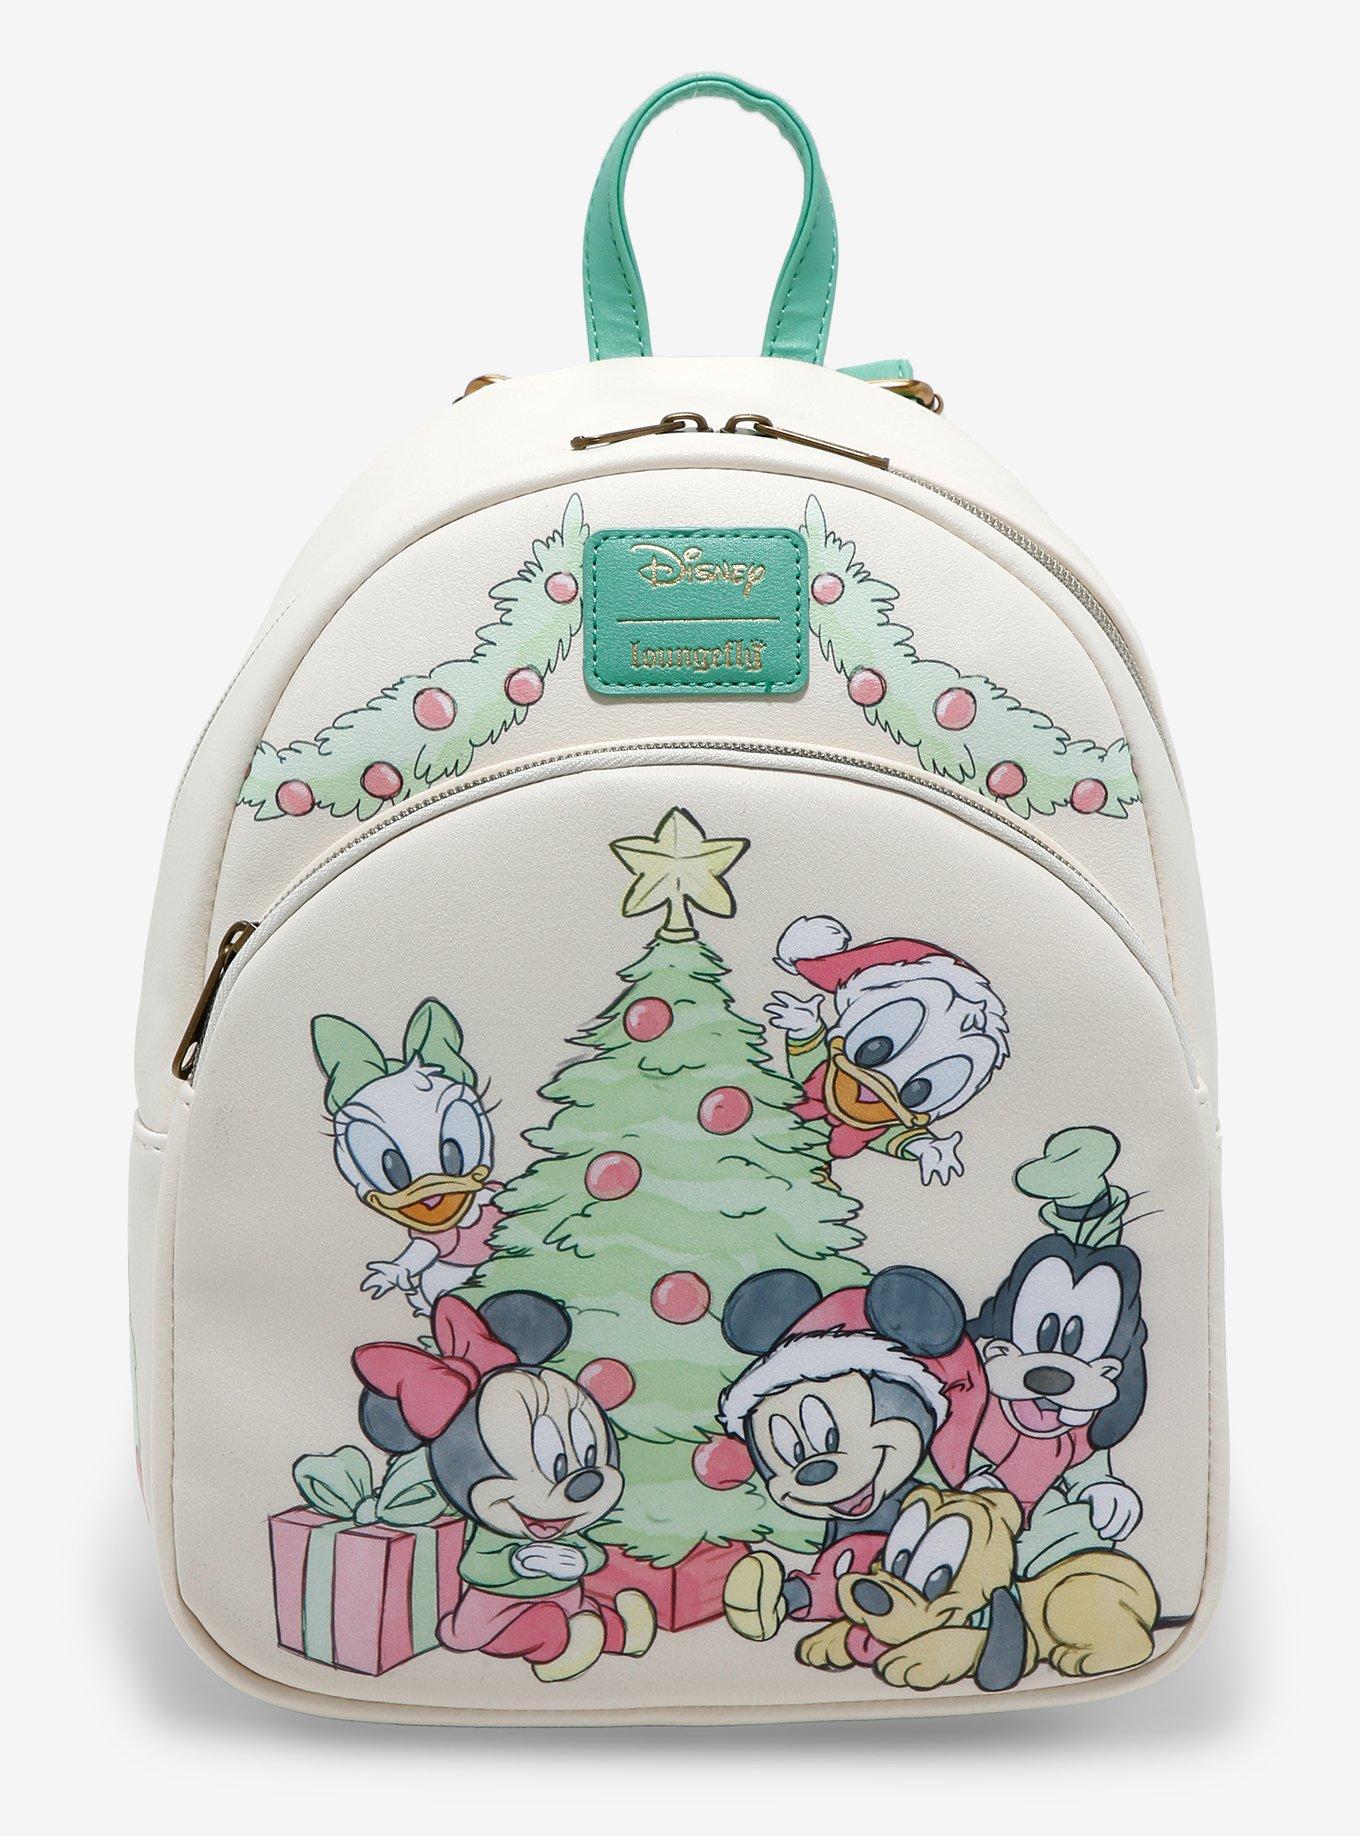 Loungefly Disney Baby Sensational Six Christmas Mini Backpack, , hi-res